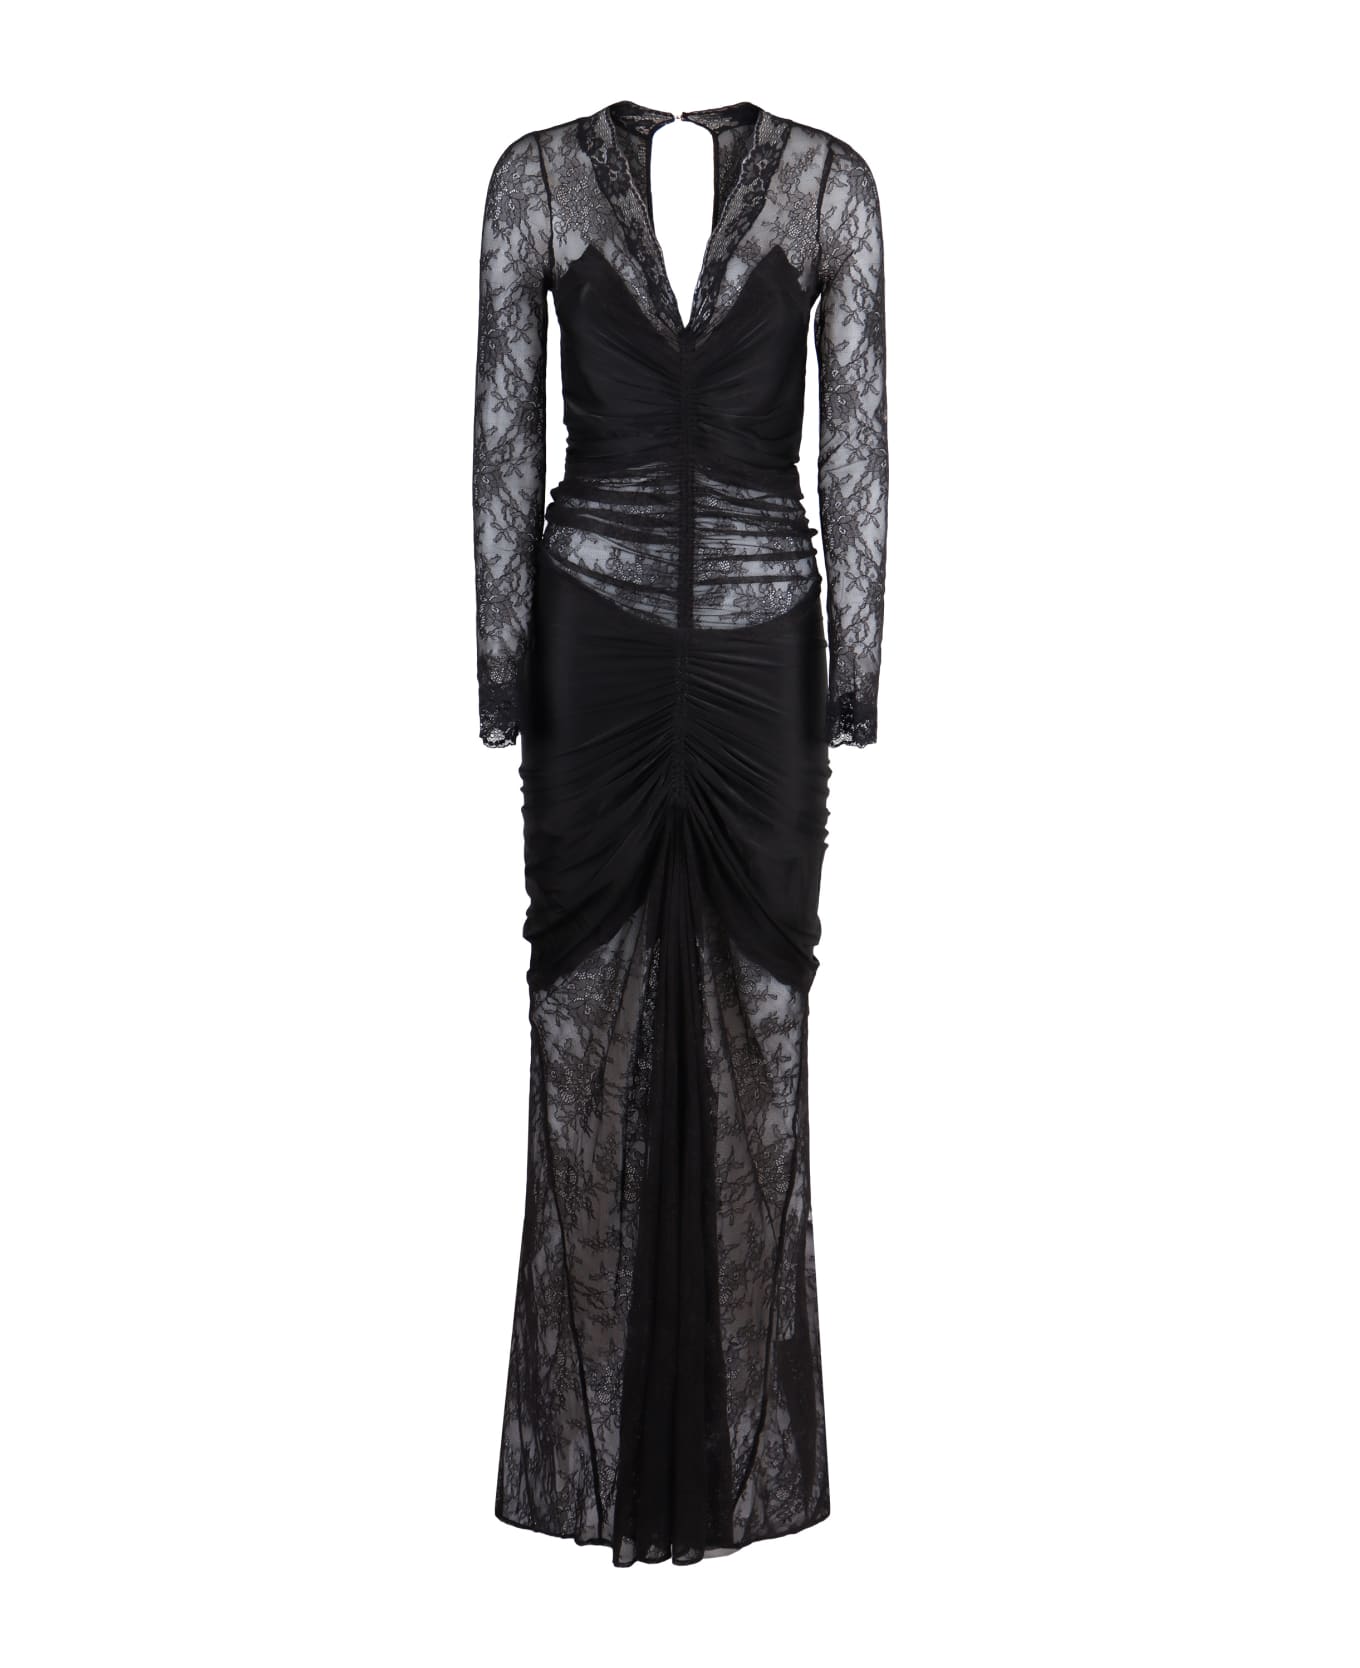 Paco Rabanne Lace Dress - black